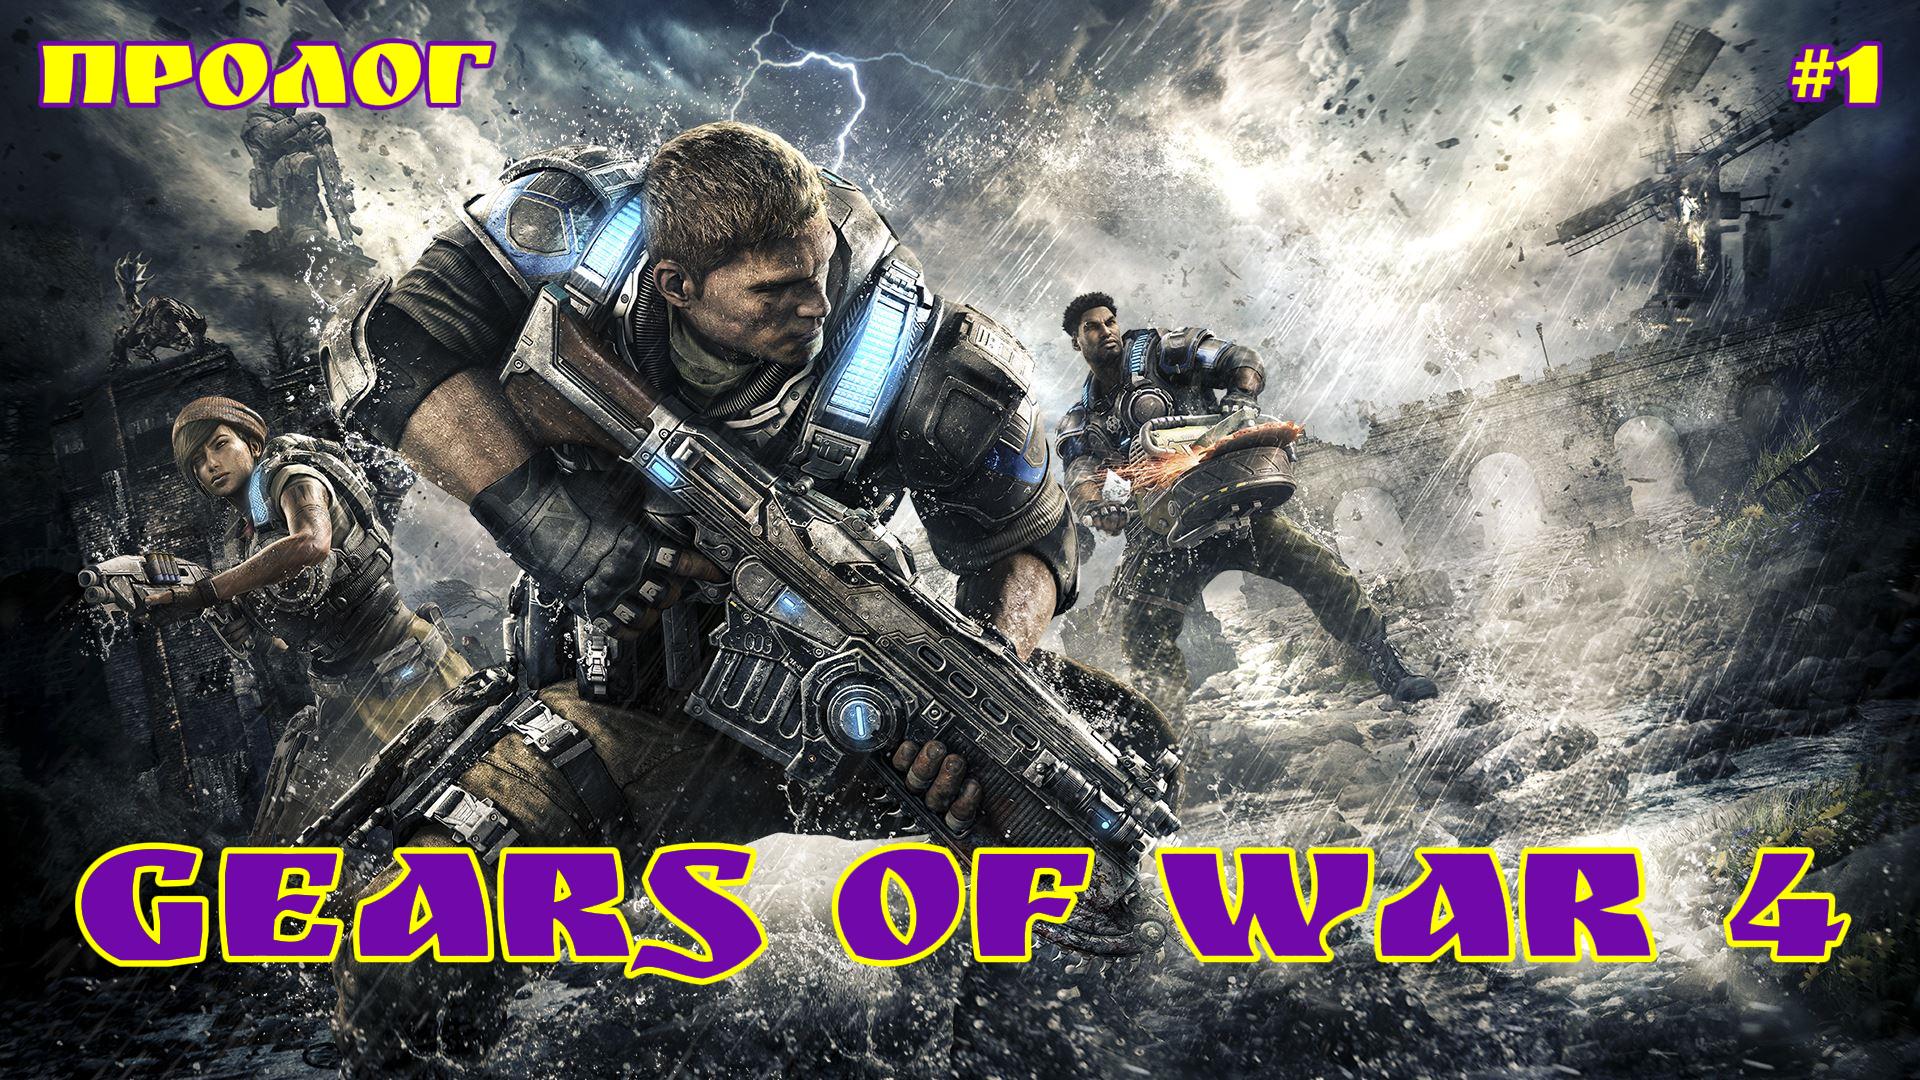 Gears of War 4 / #1 / XBOX SERIES S